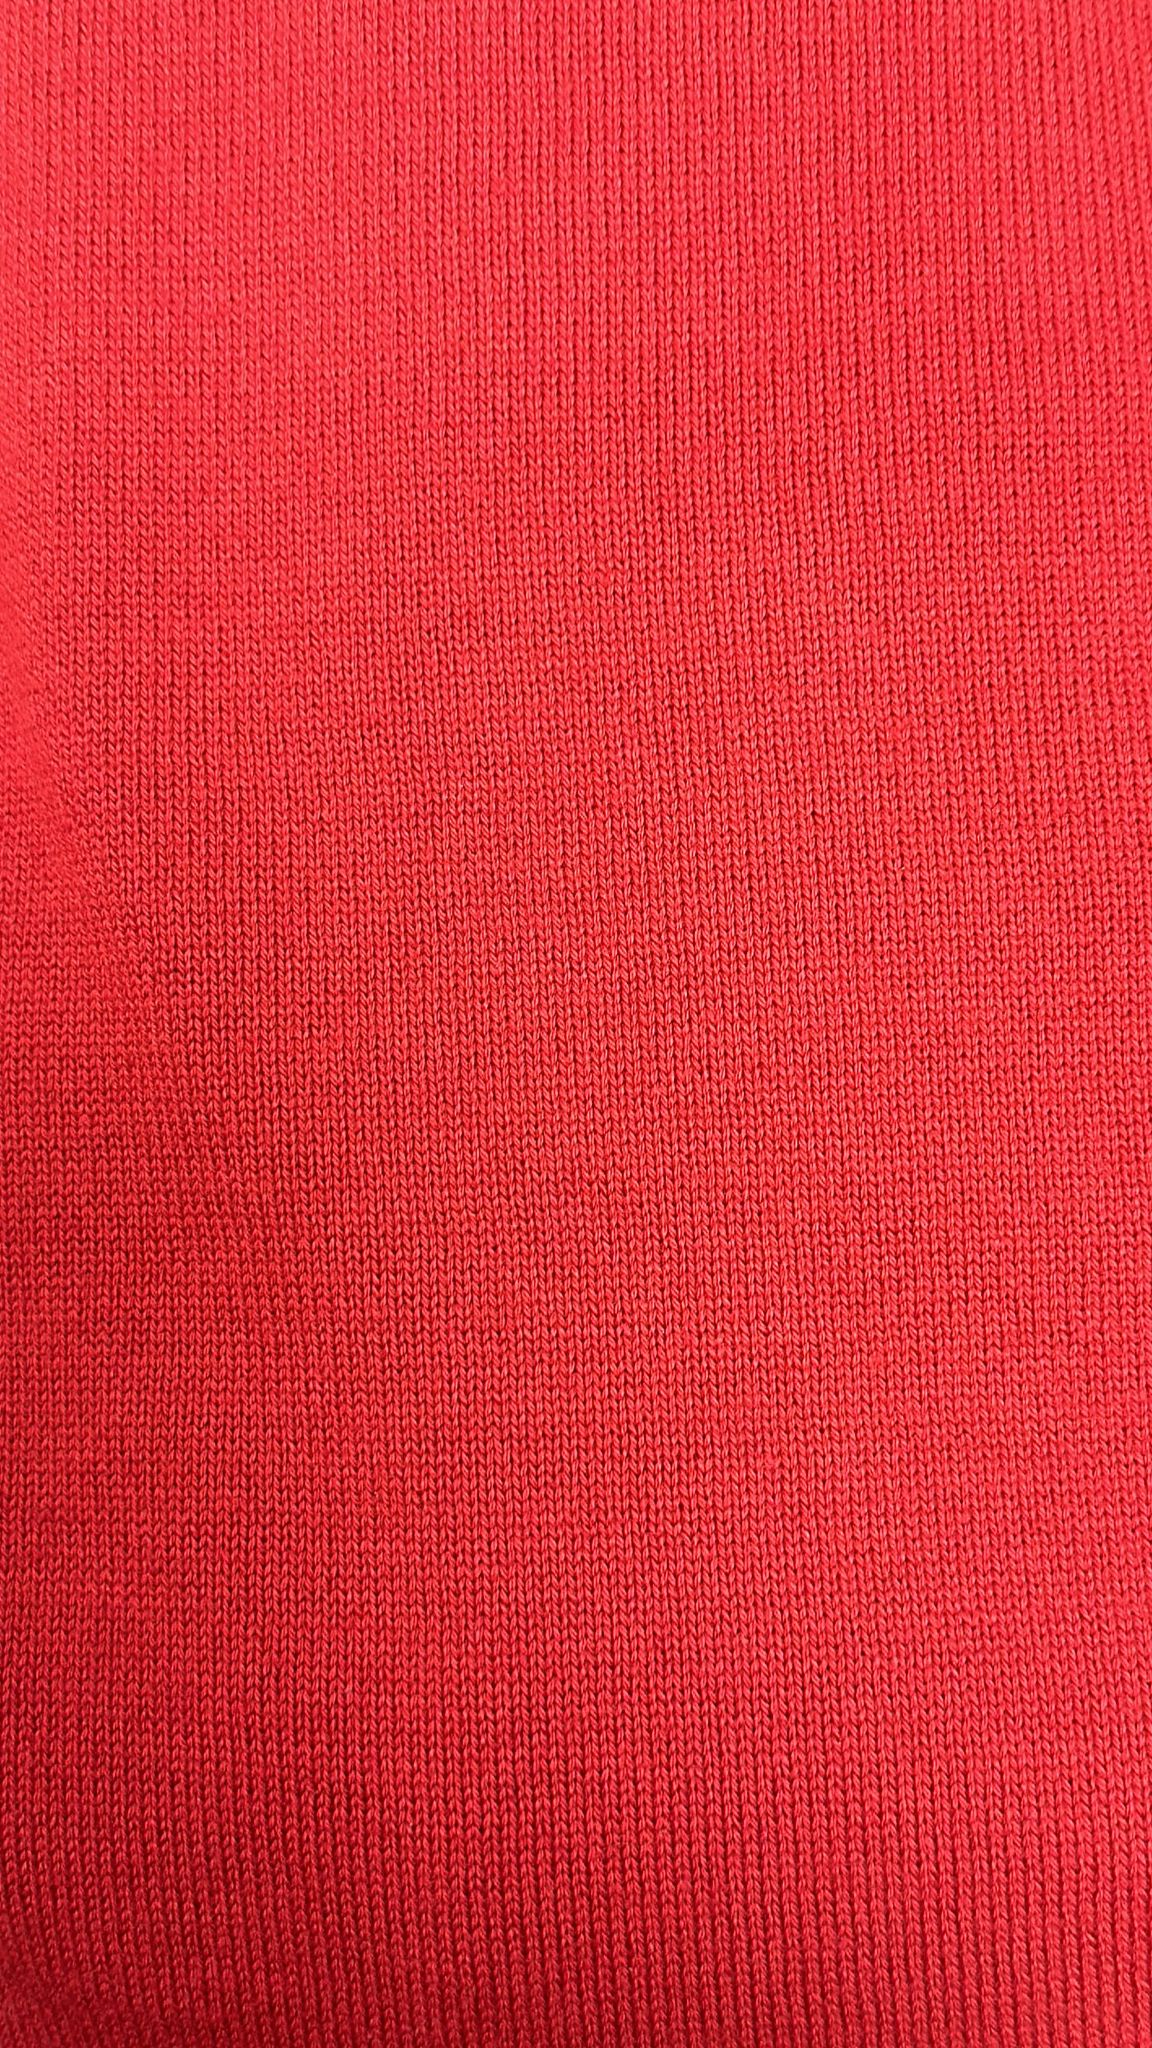 Arthur Black Men's Solid Red Pullover Cotton Blend Turtleneck Sweater Shirt